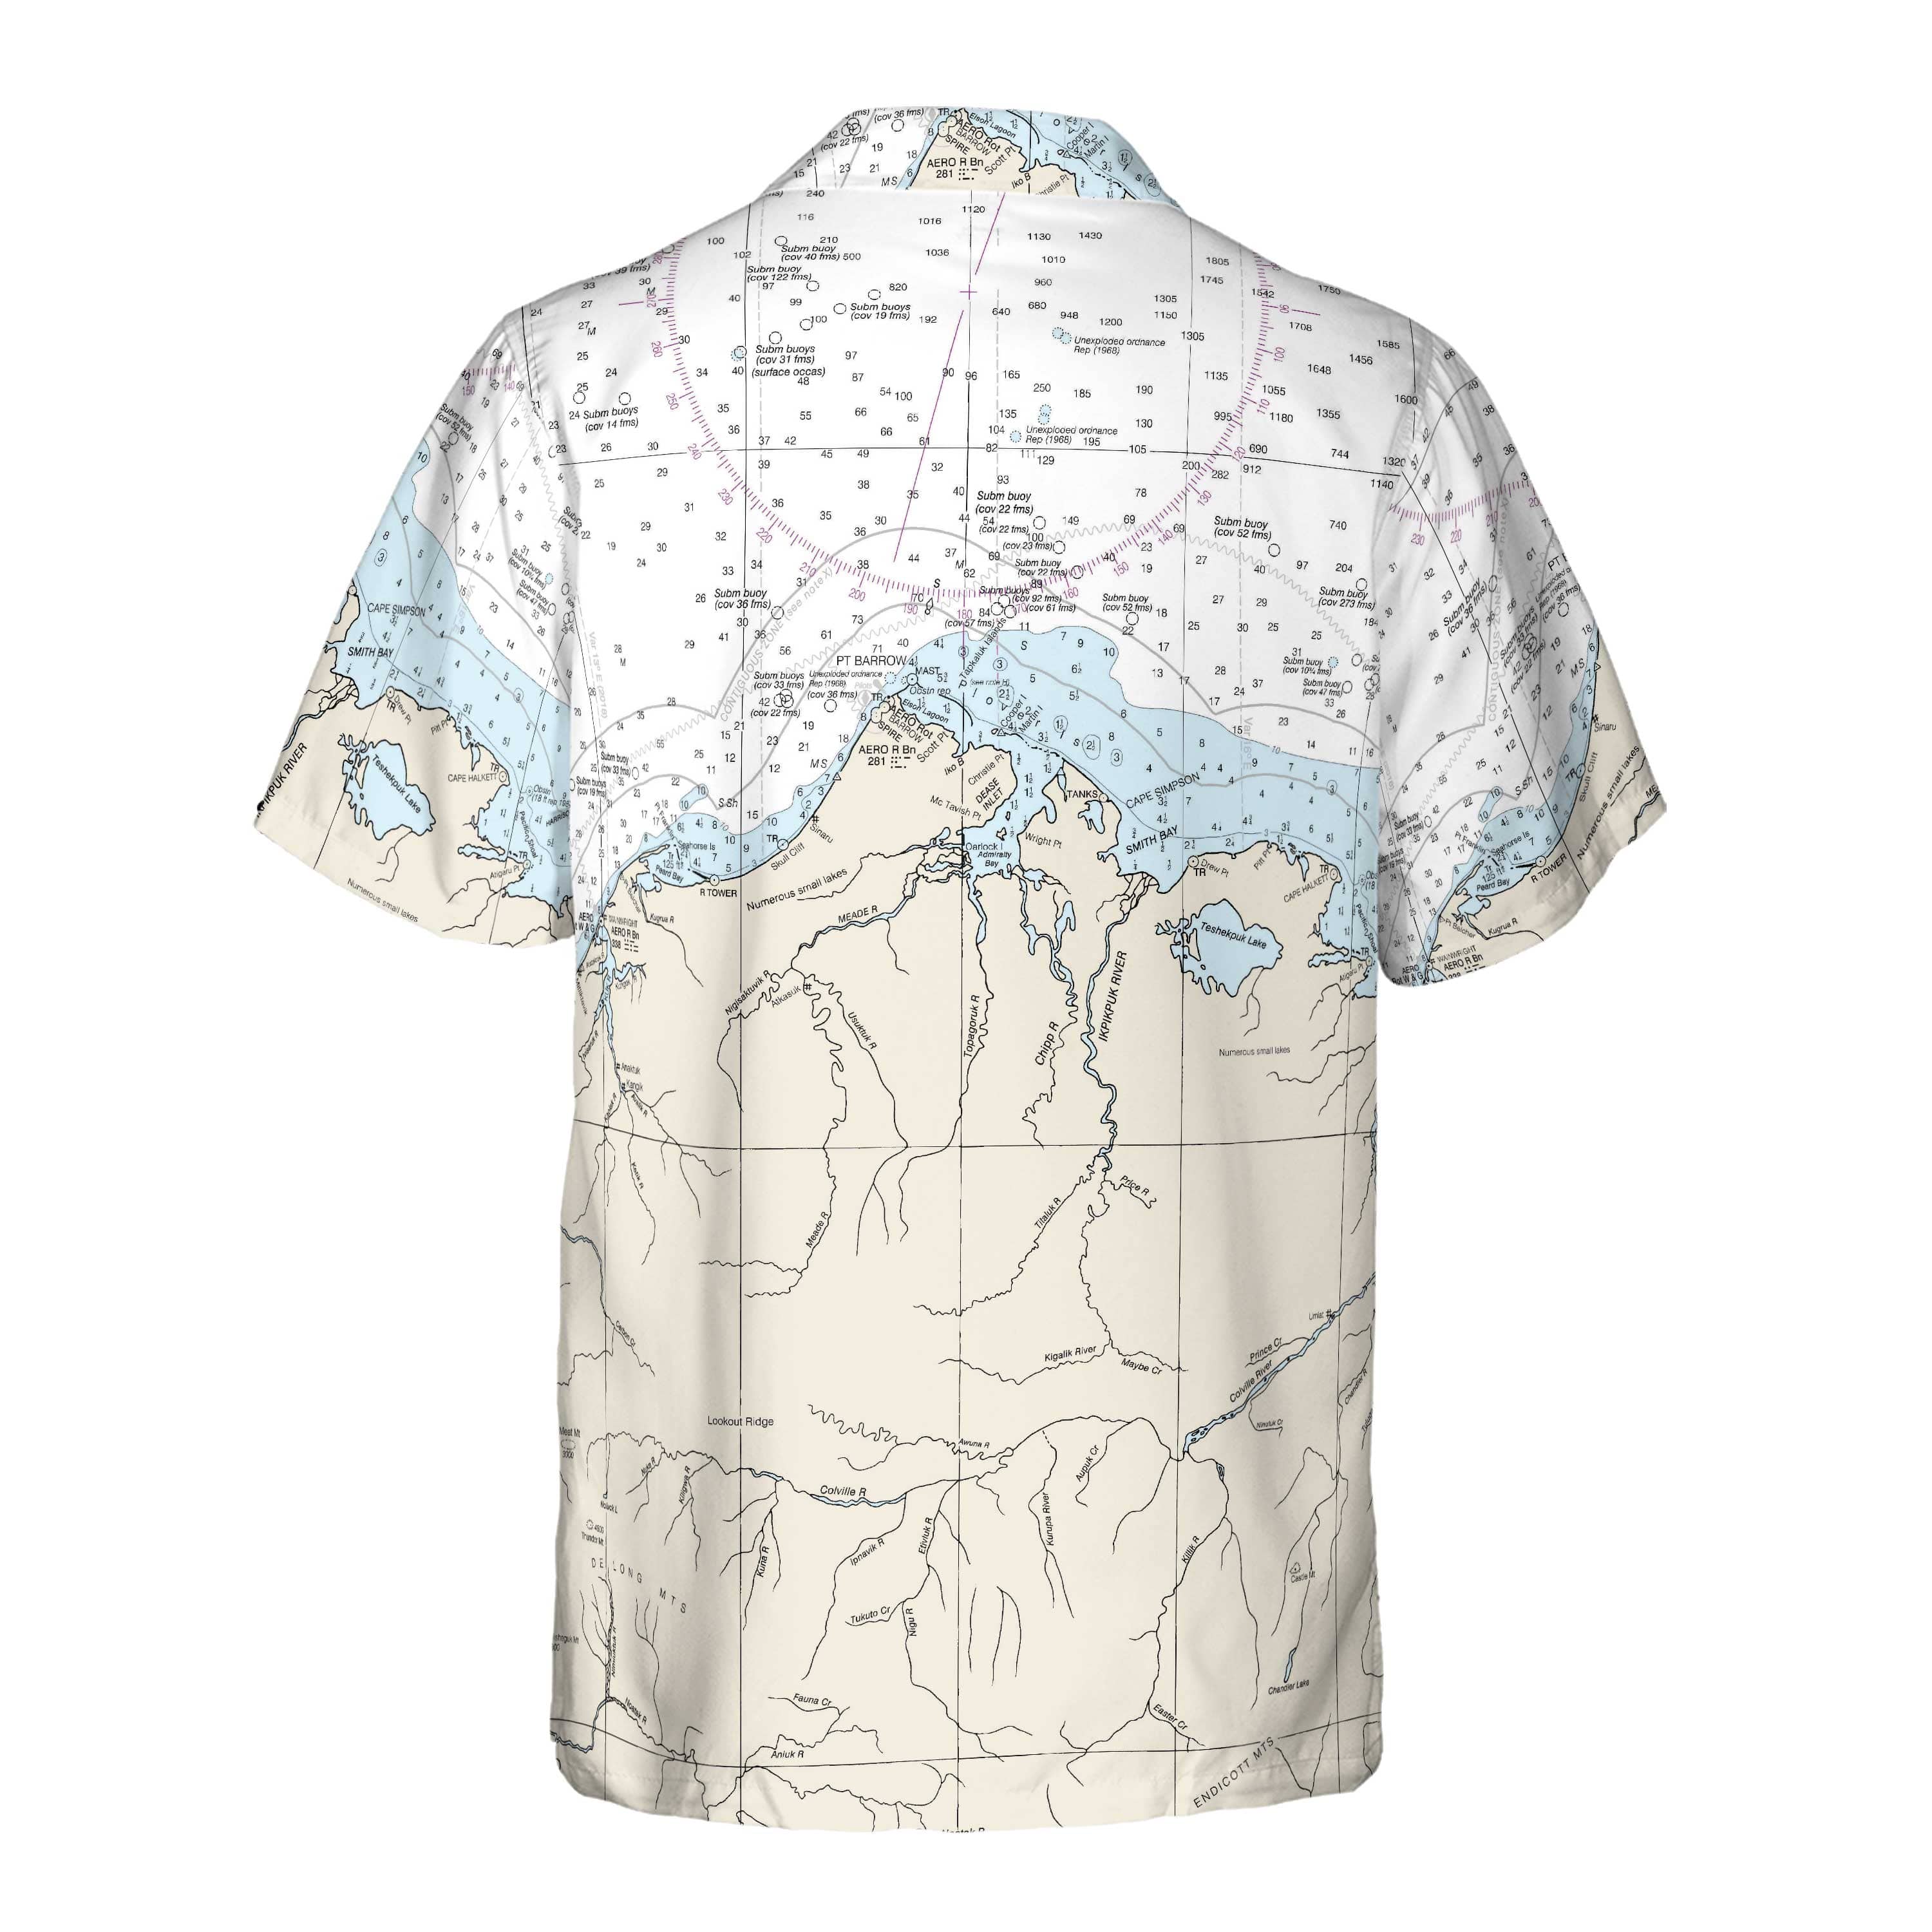 The Point Barrow Pocket Shirt